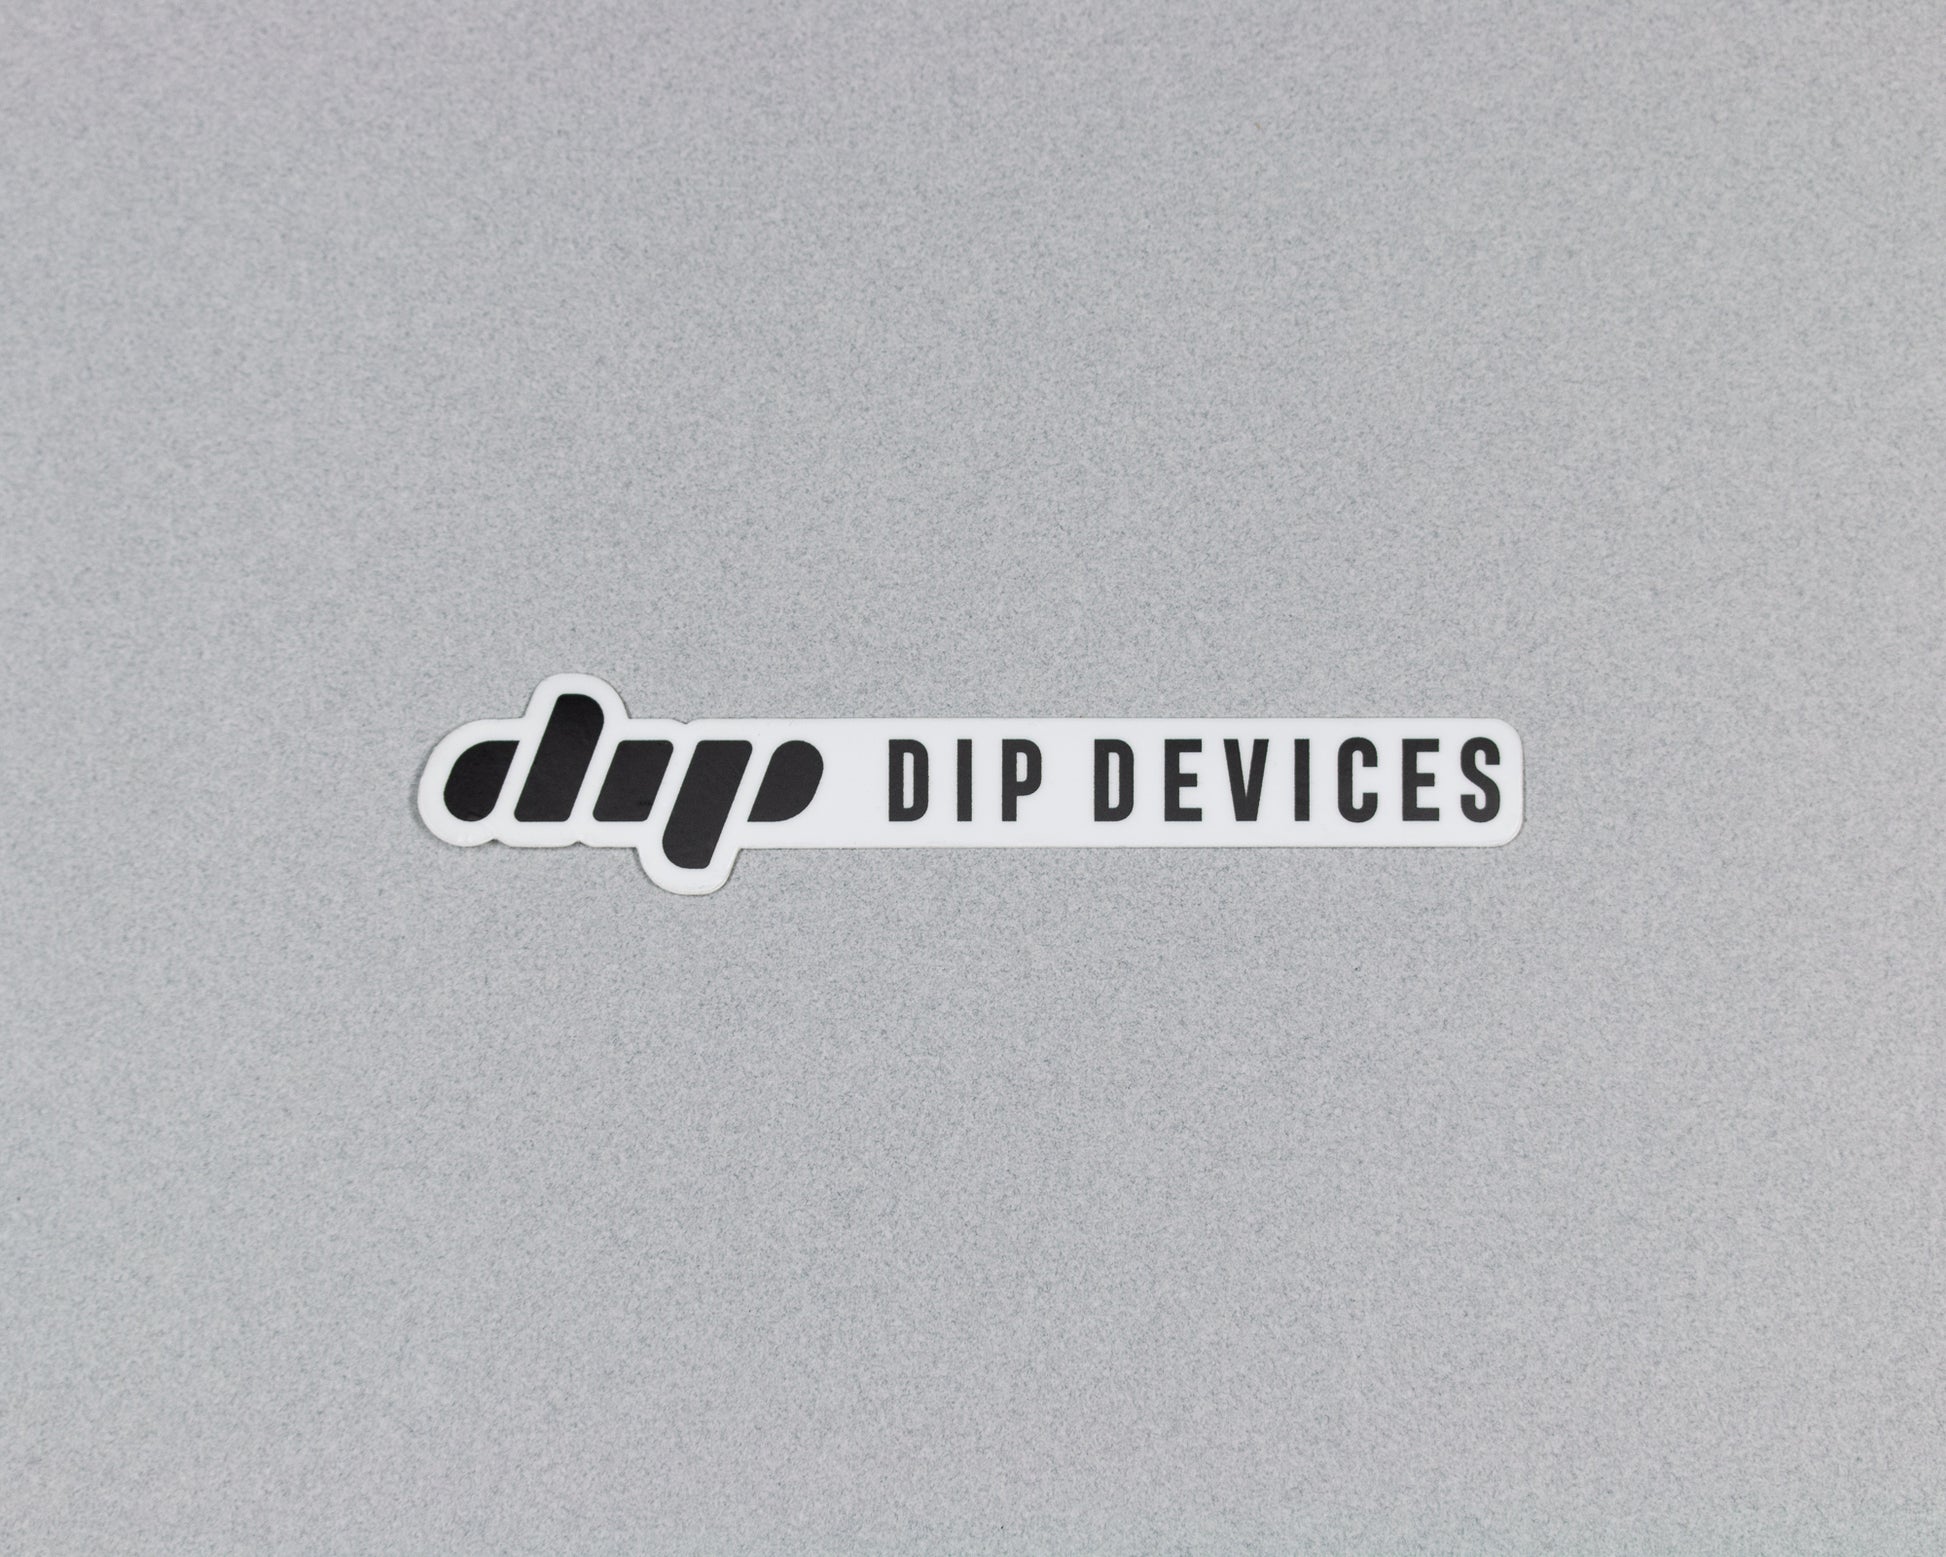 Dip Devices logo sticker black